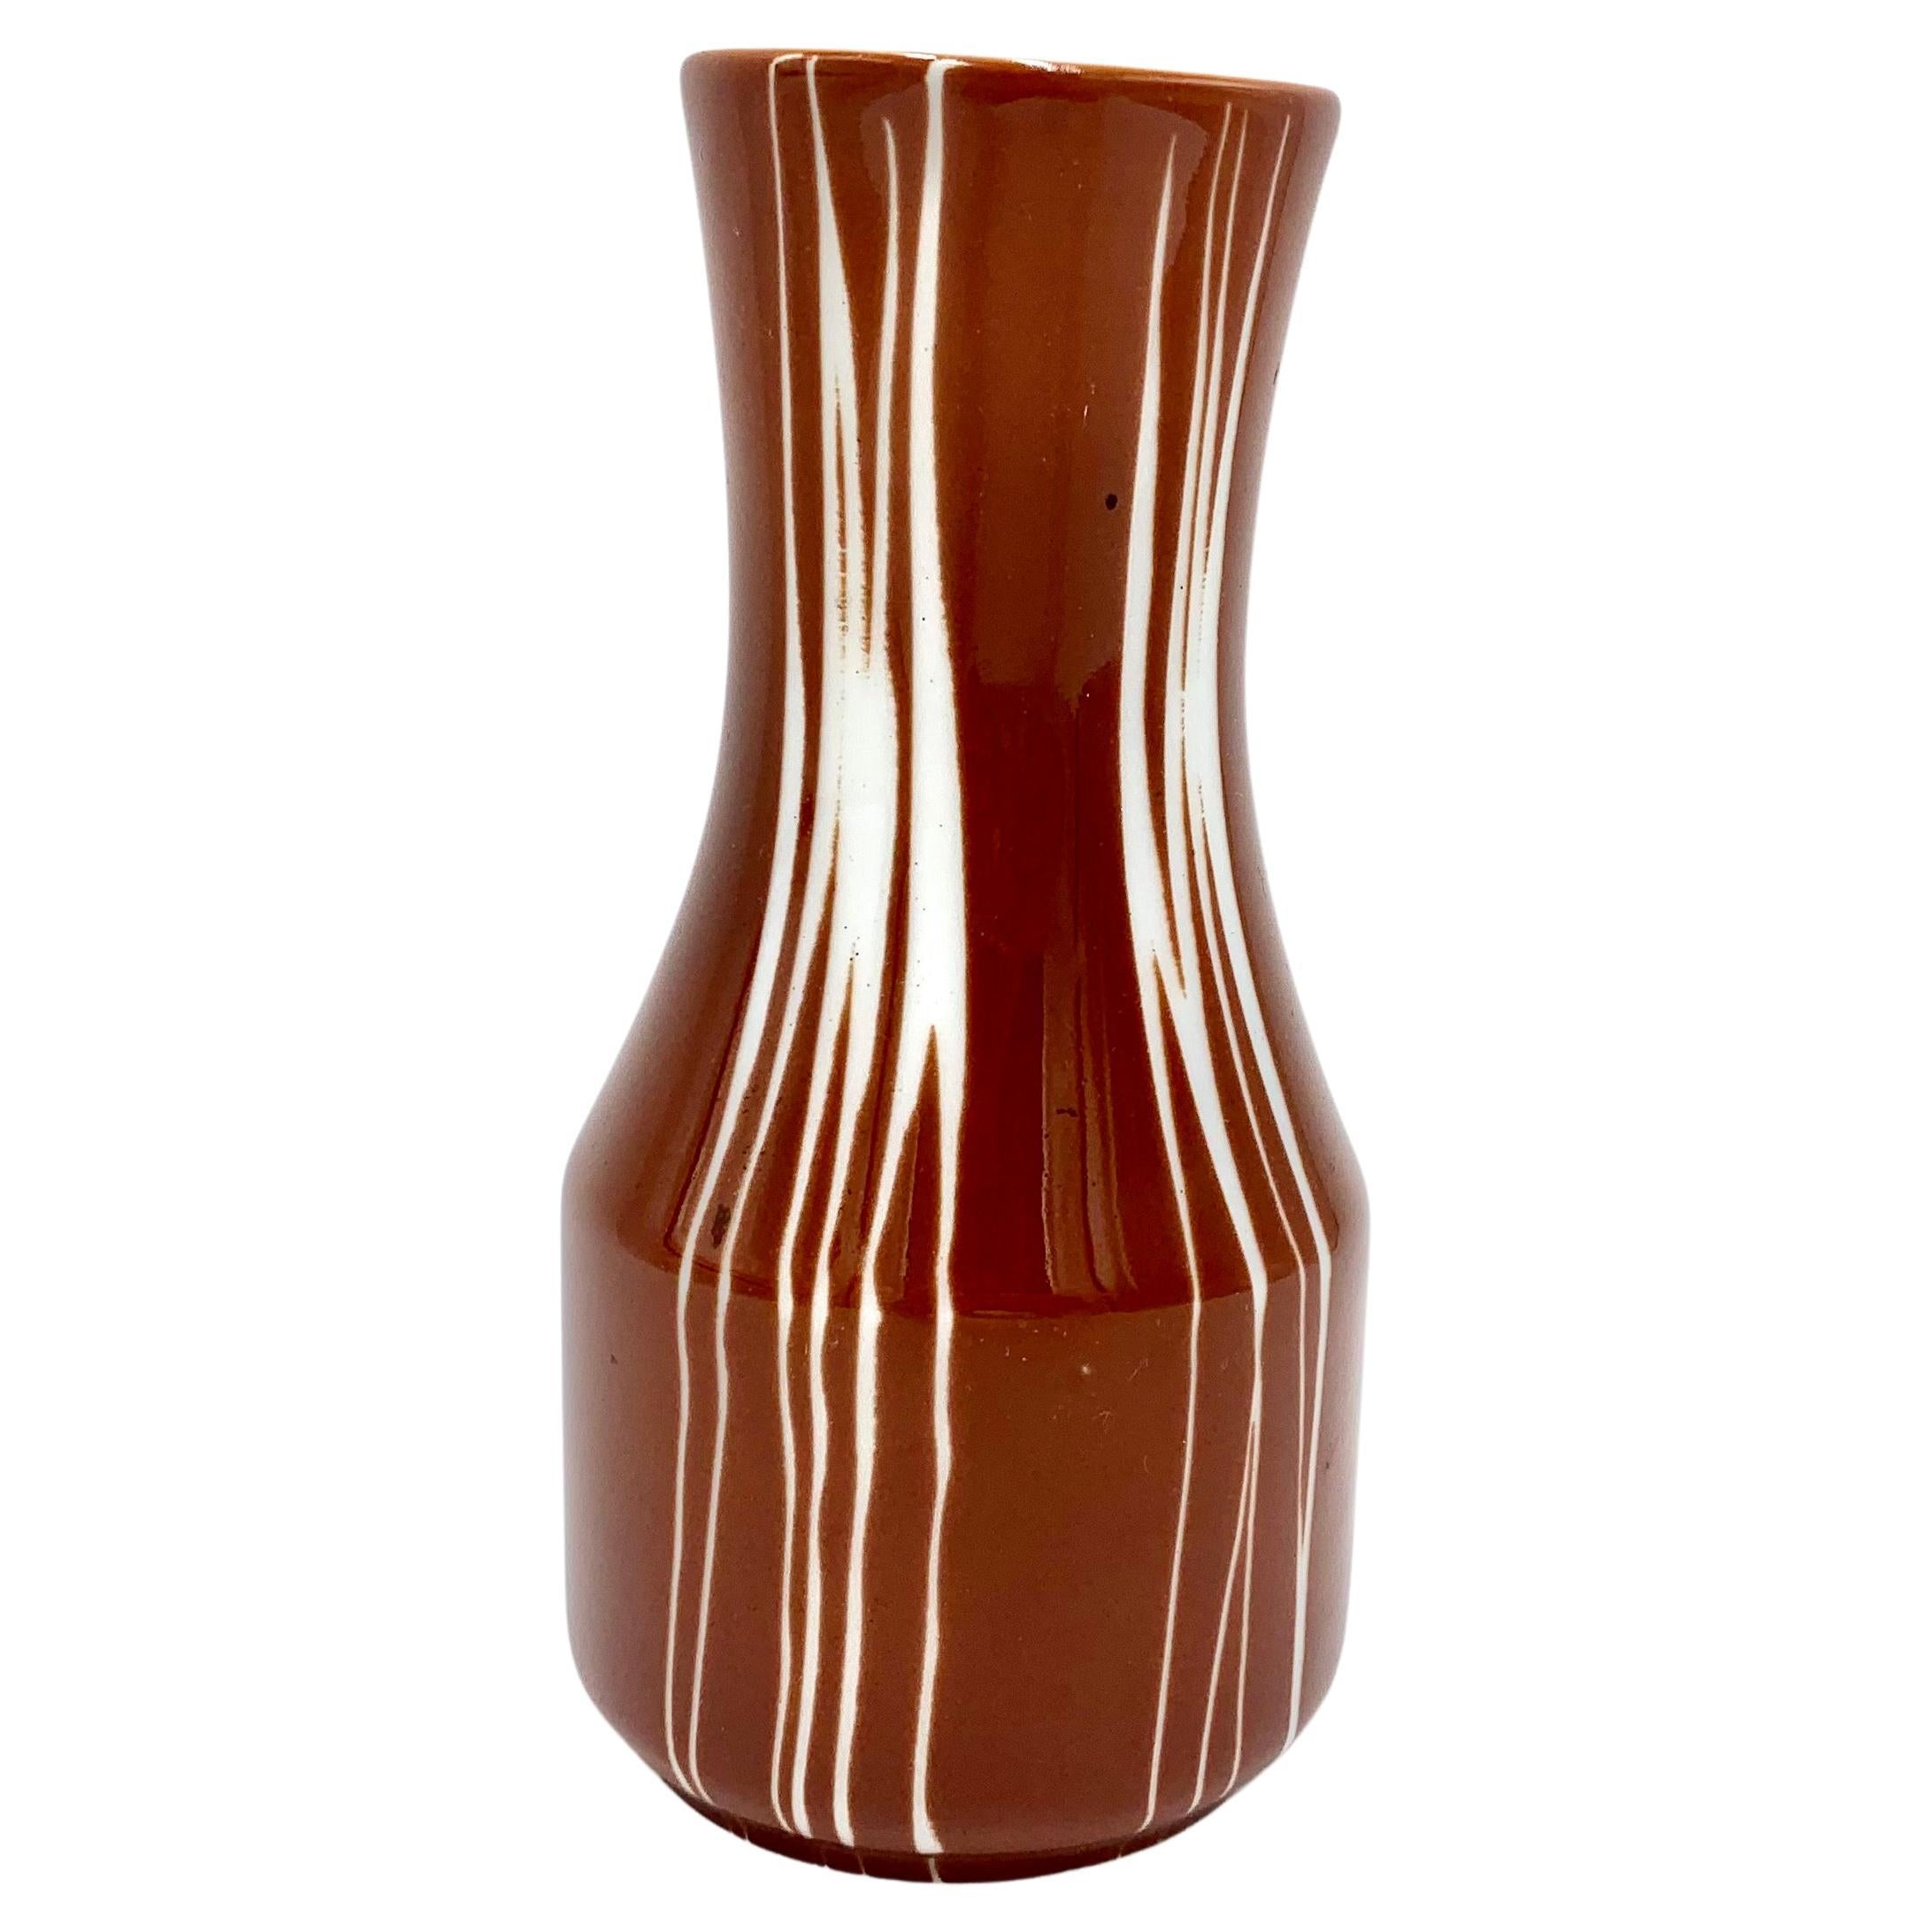 Brown Midcentury Vase, Wawel, Poland New Look, 1960s For Sale